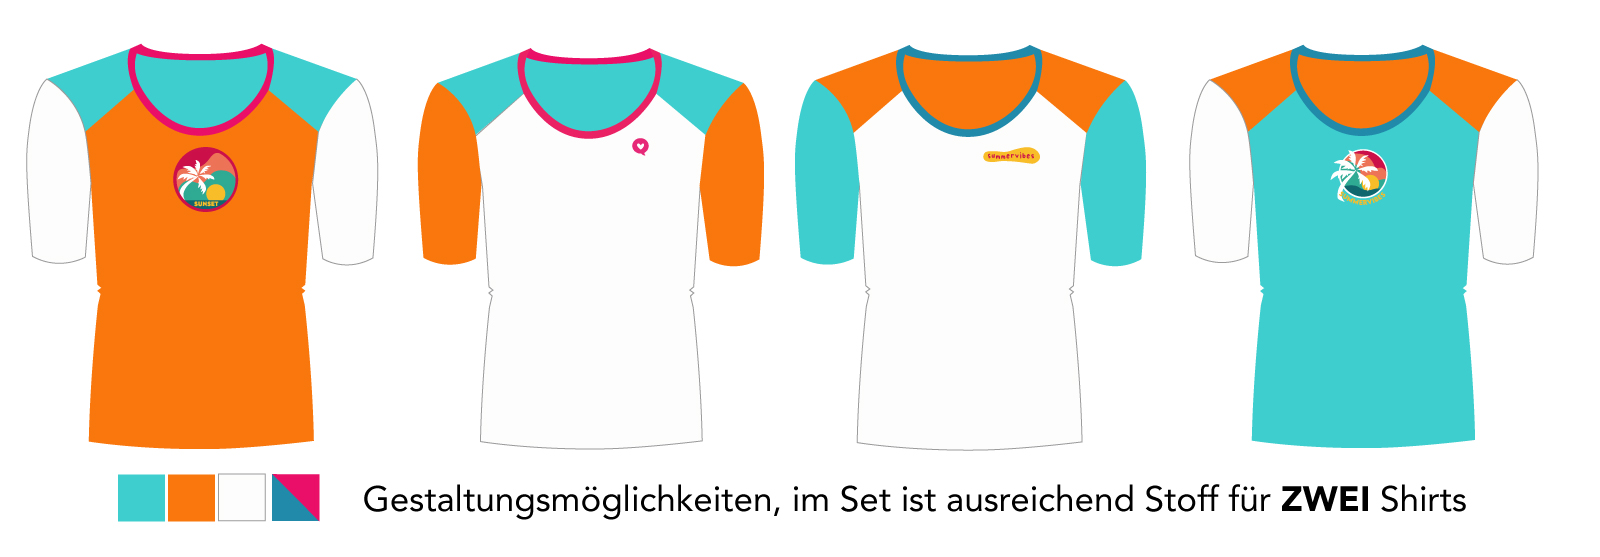 Nähset Basic Shirt2 -orange/türkis-